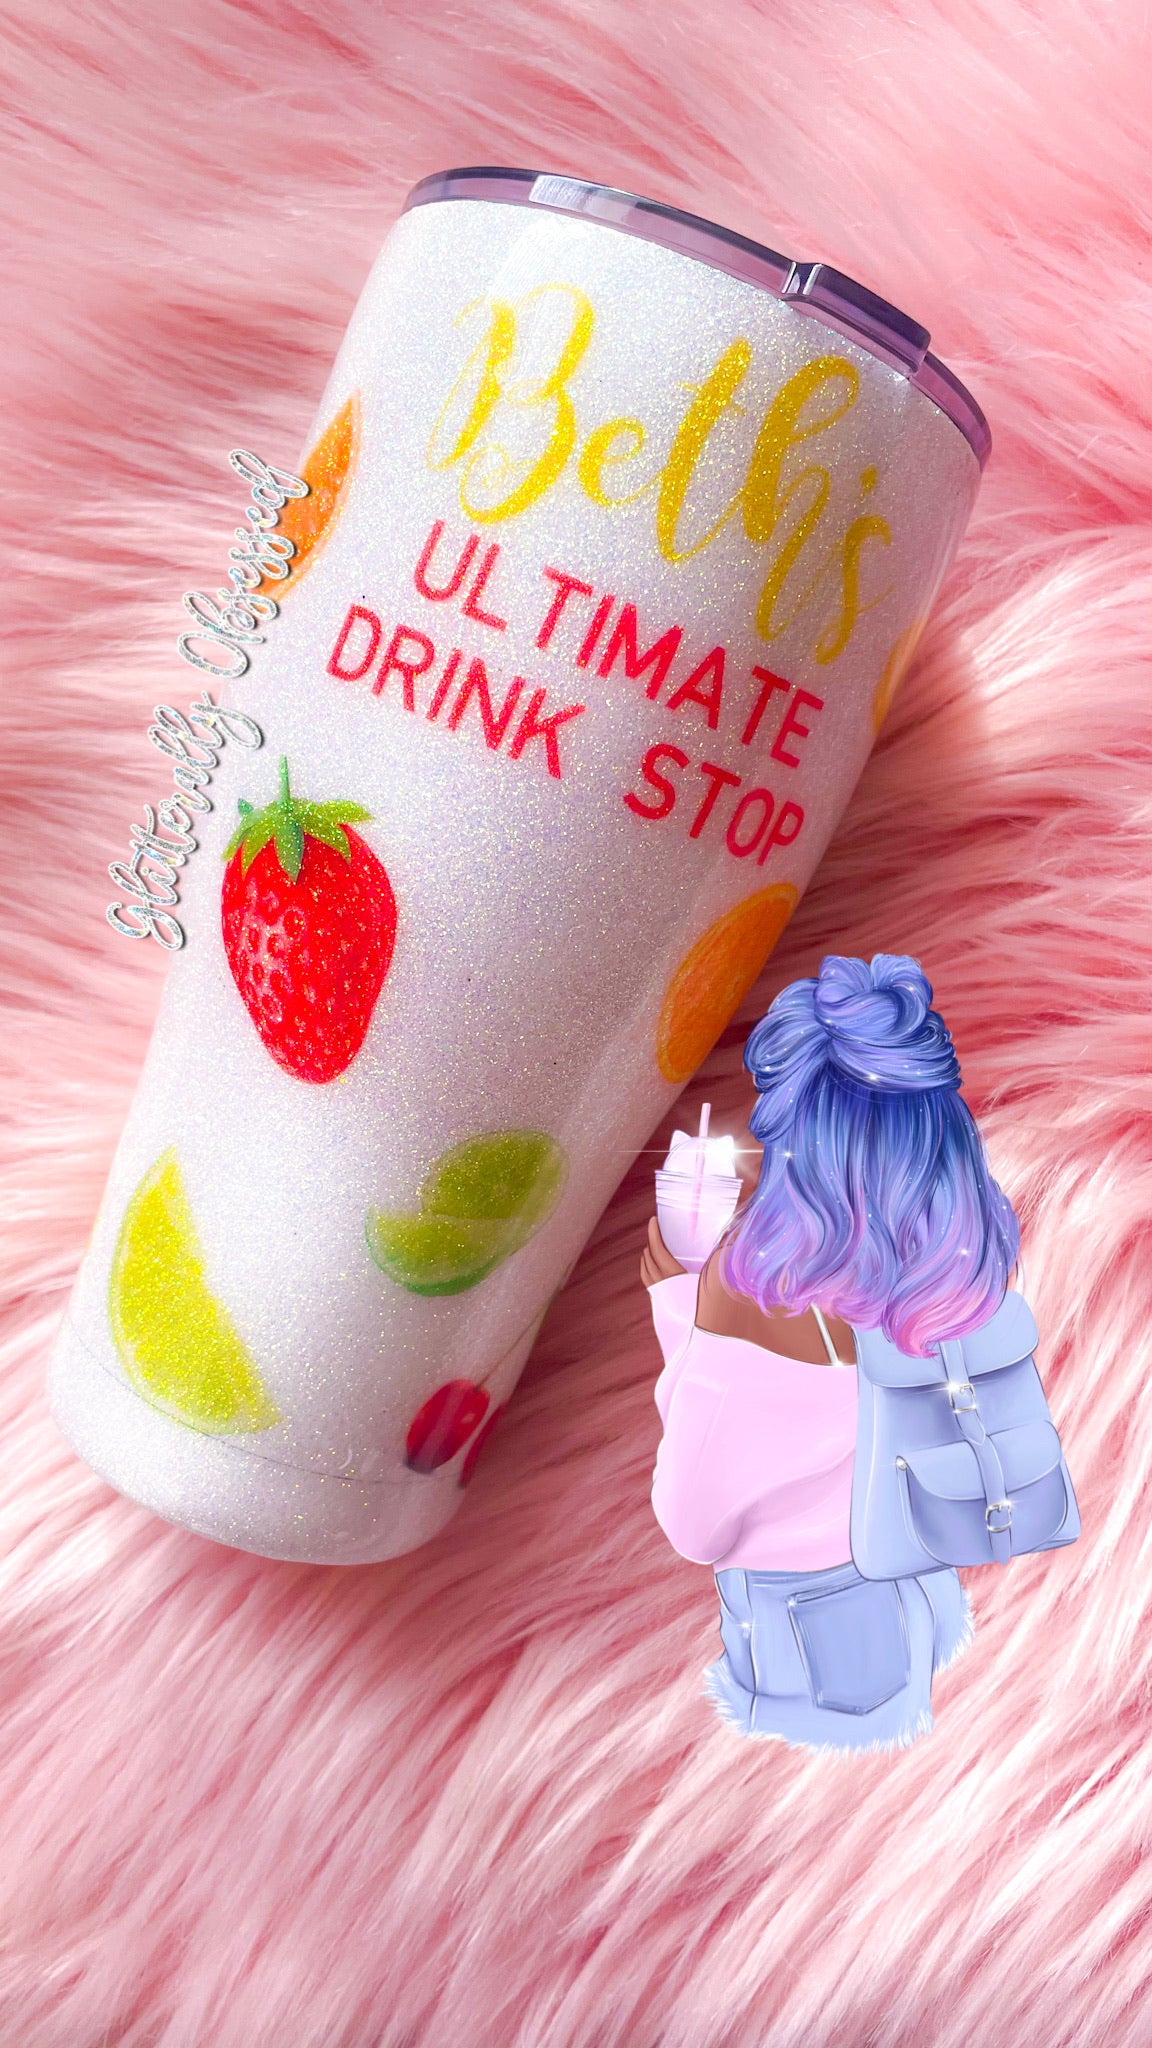 Ultimate Drink Stop